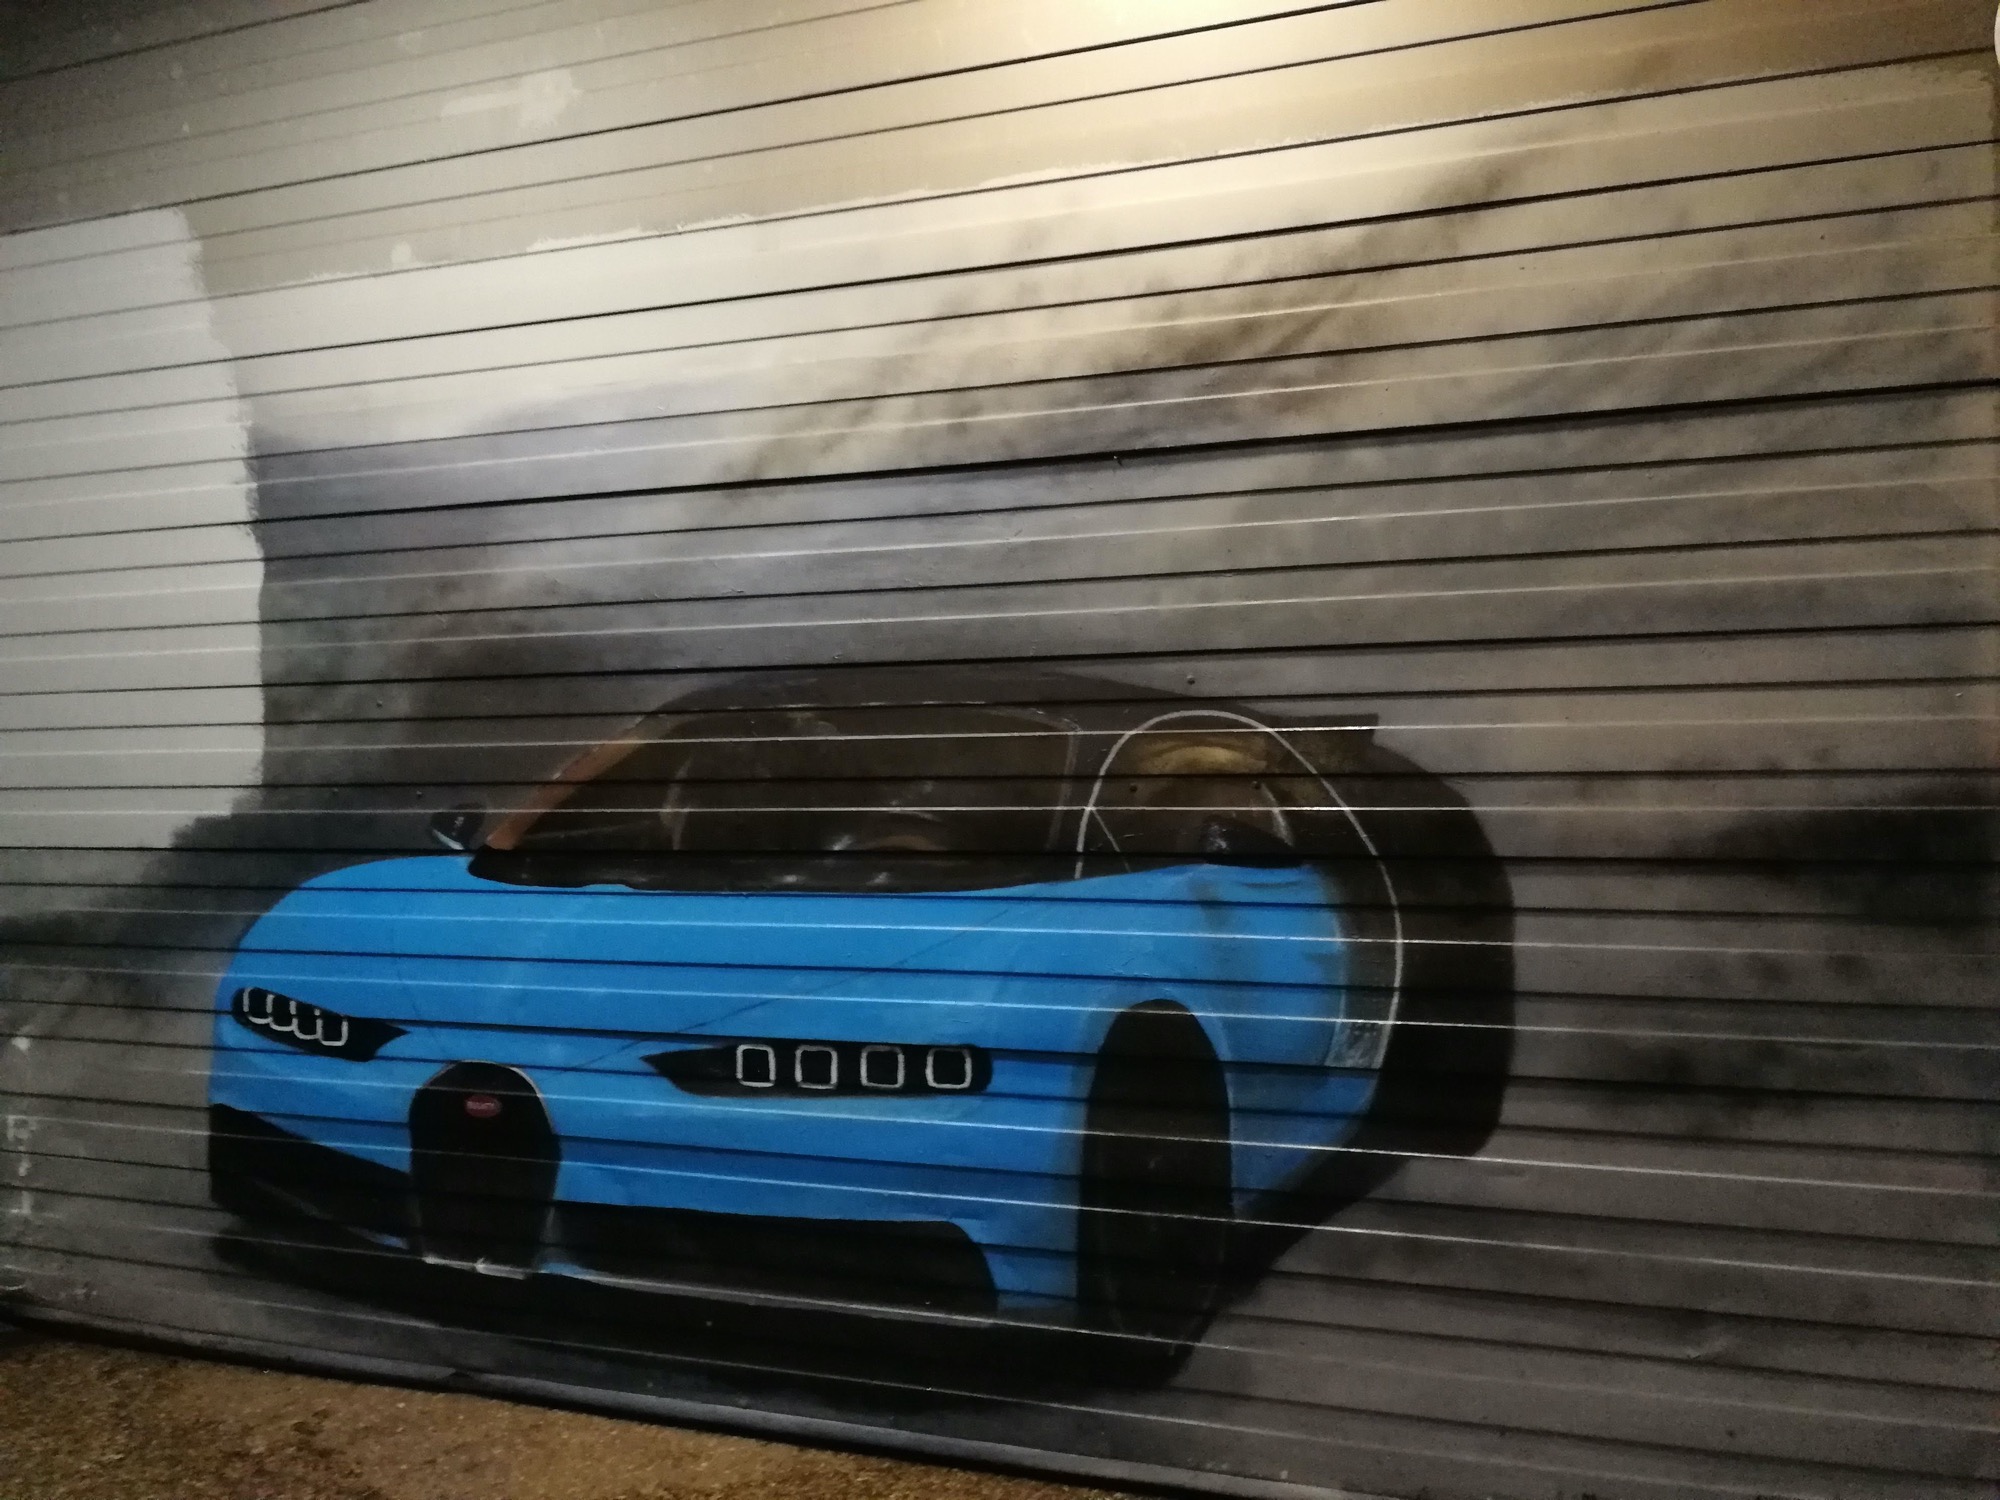 Graffiti 655 Bugatti Veyron captured by Rabot in Paris France